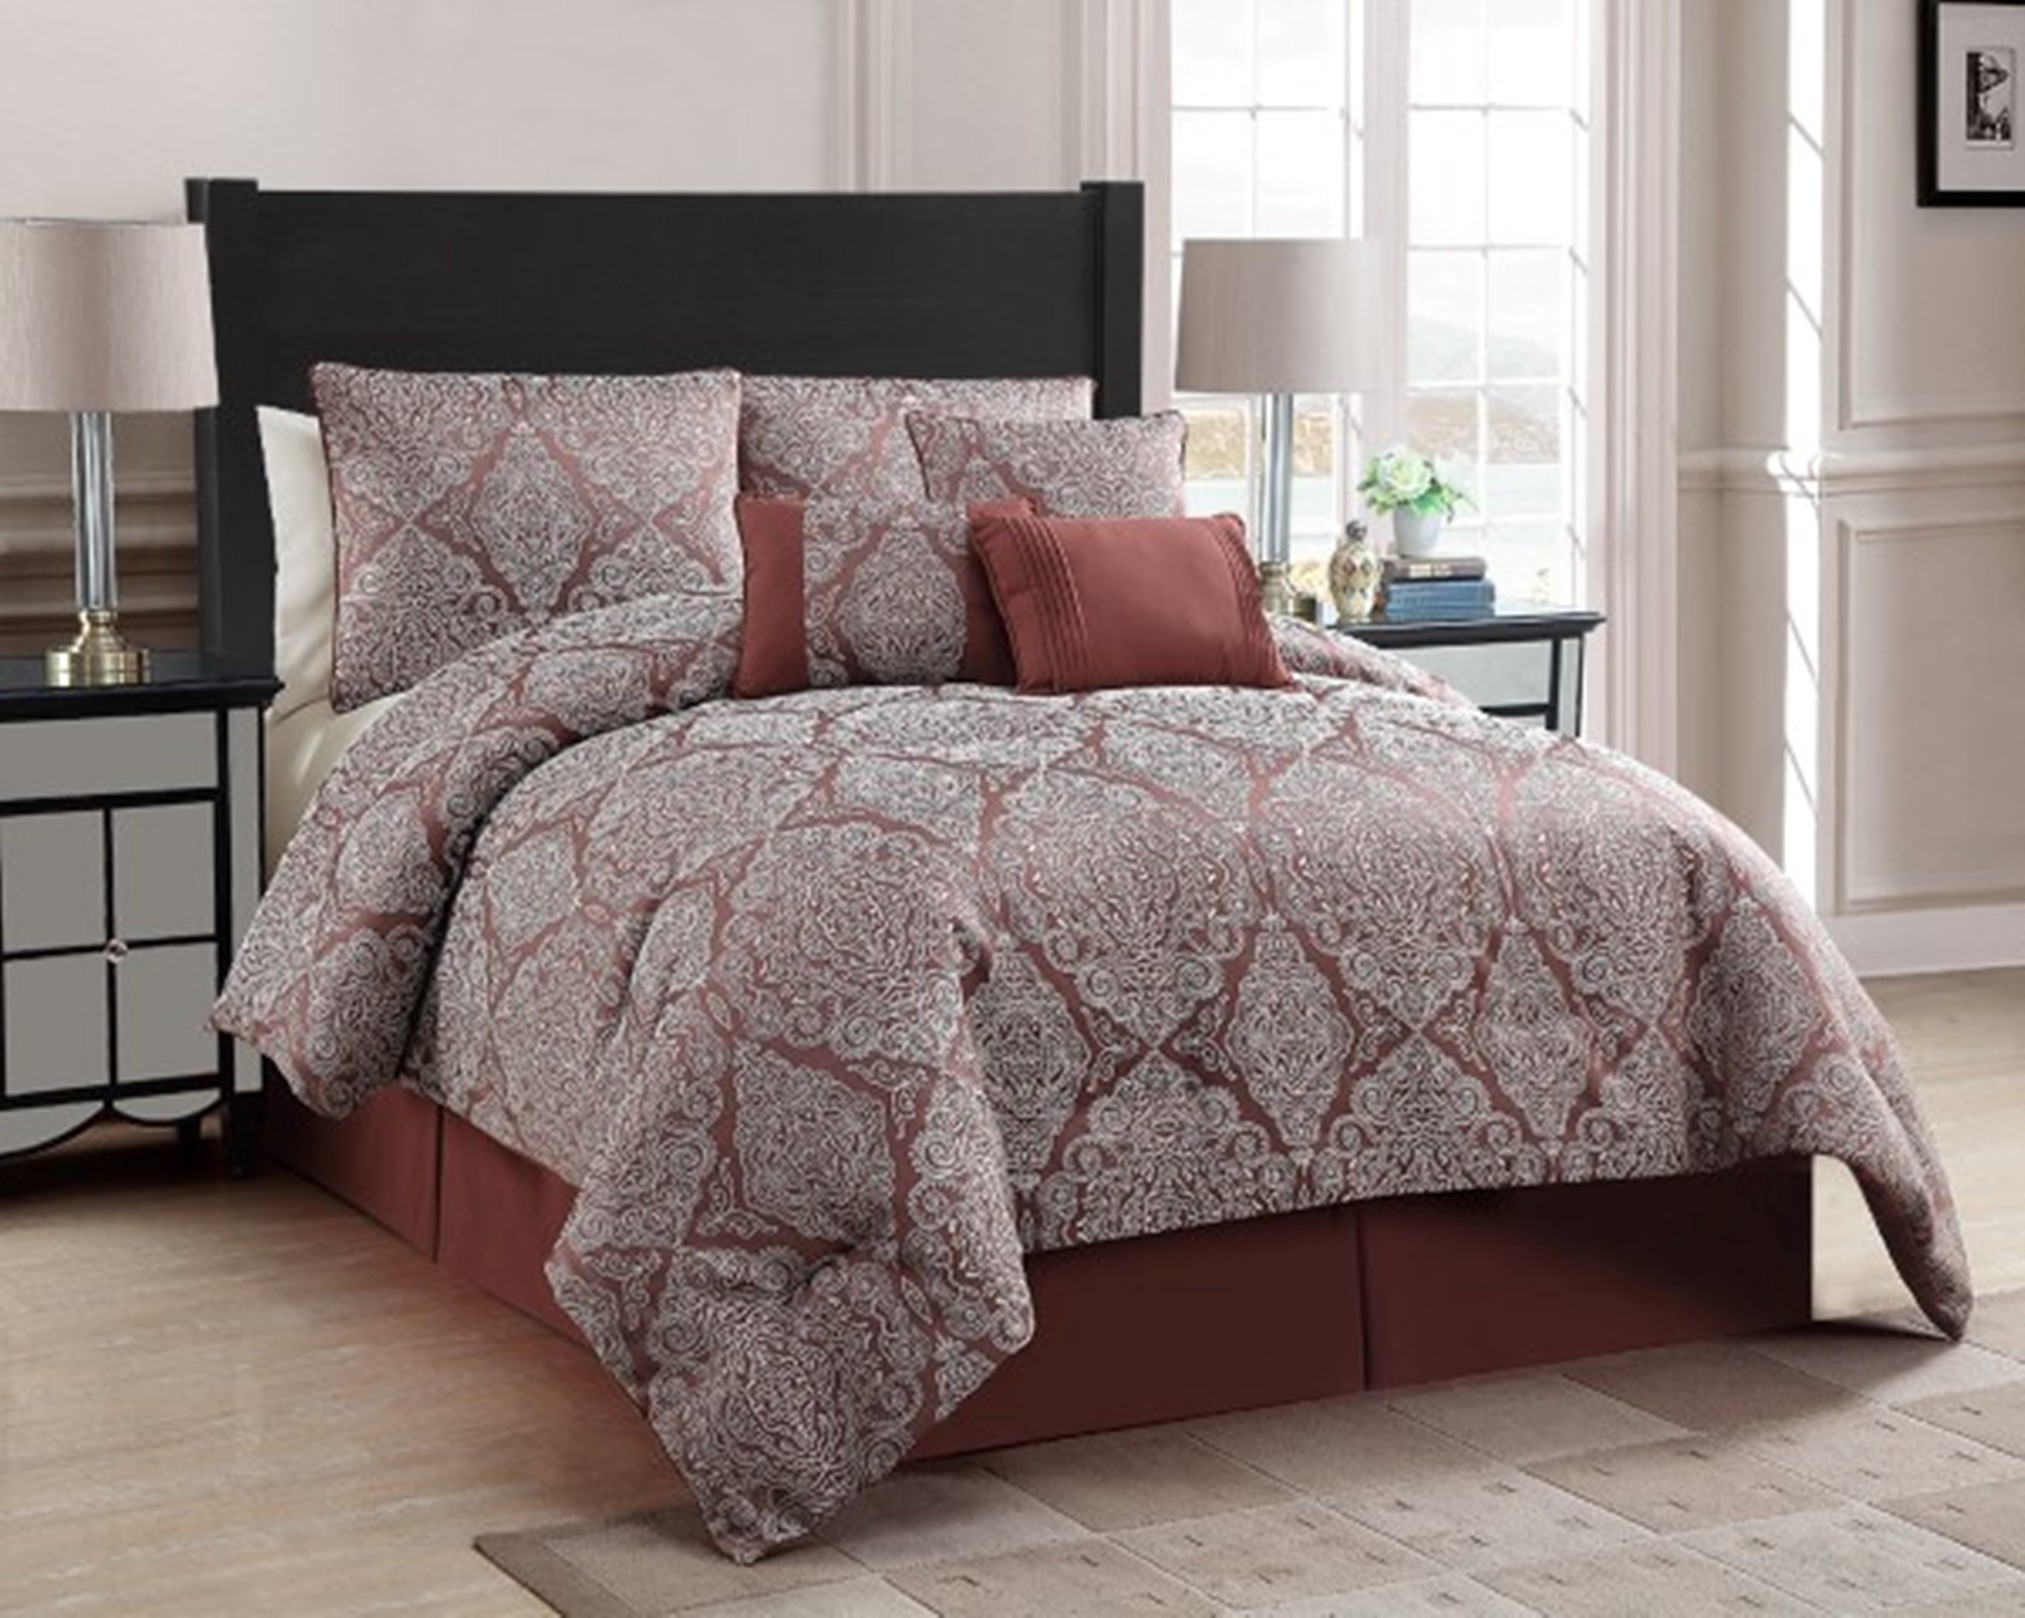 7-Piece Comforter Set - Berkley Jacquard  - Spice